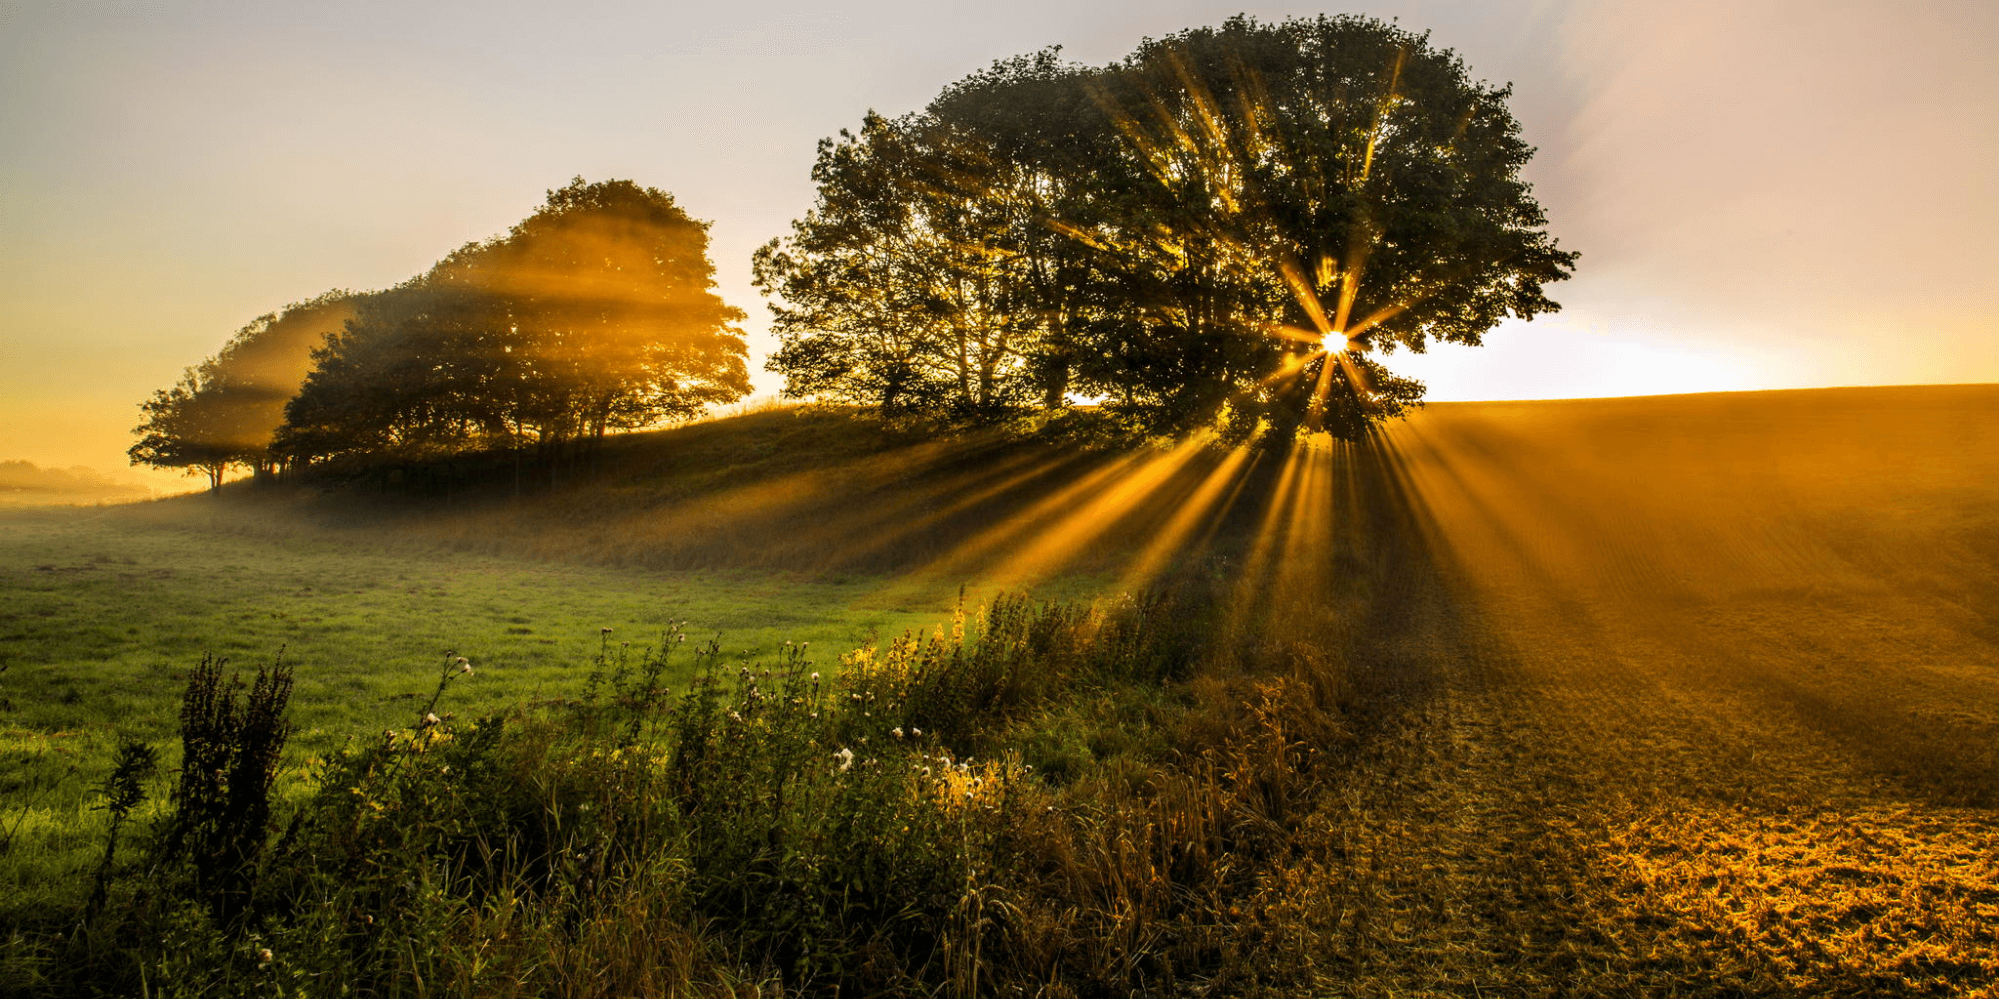 Natural Light Photography Photos with natural light at golden hour